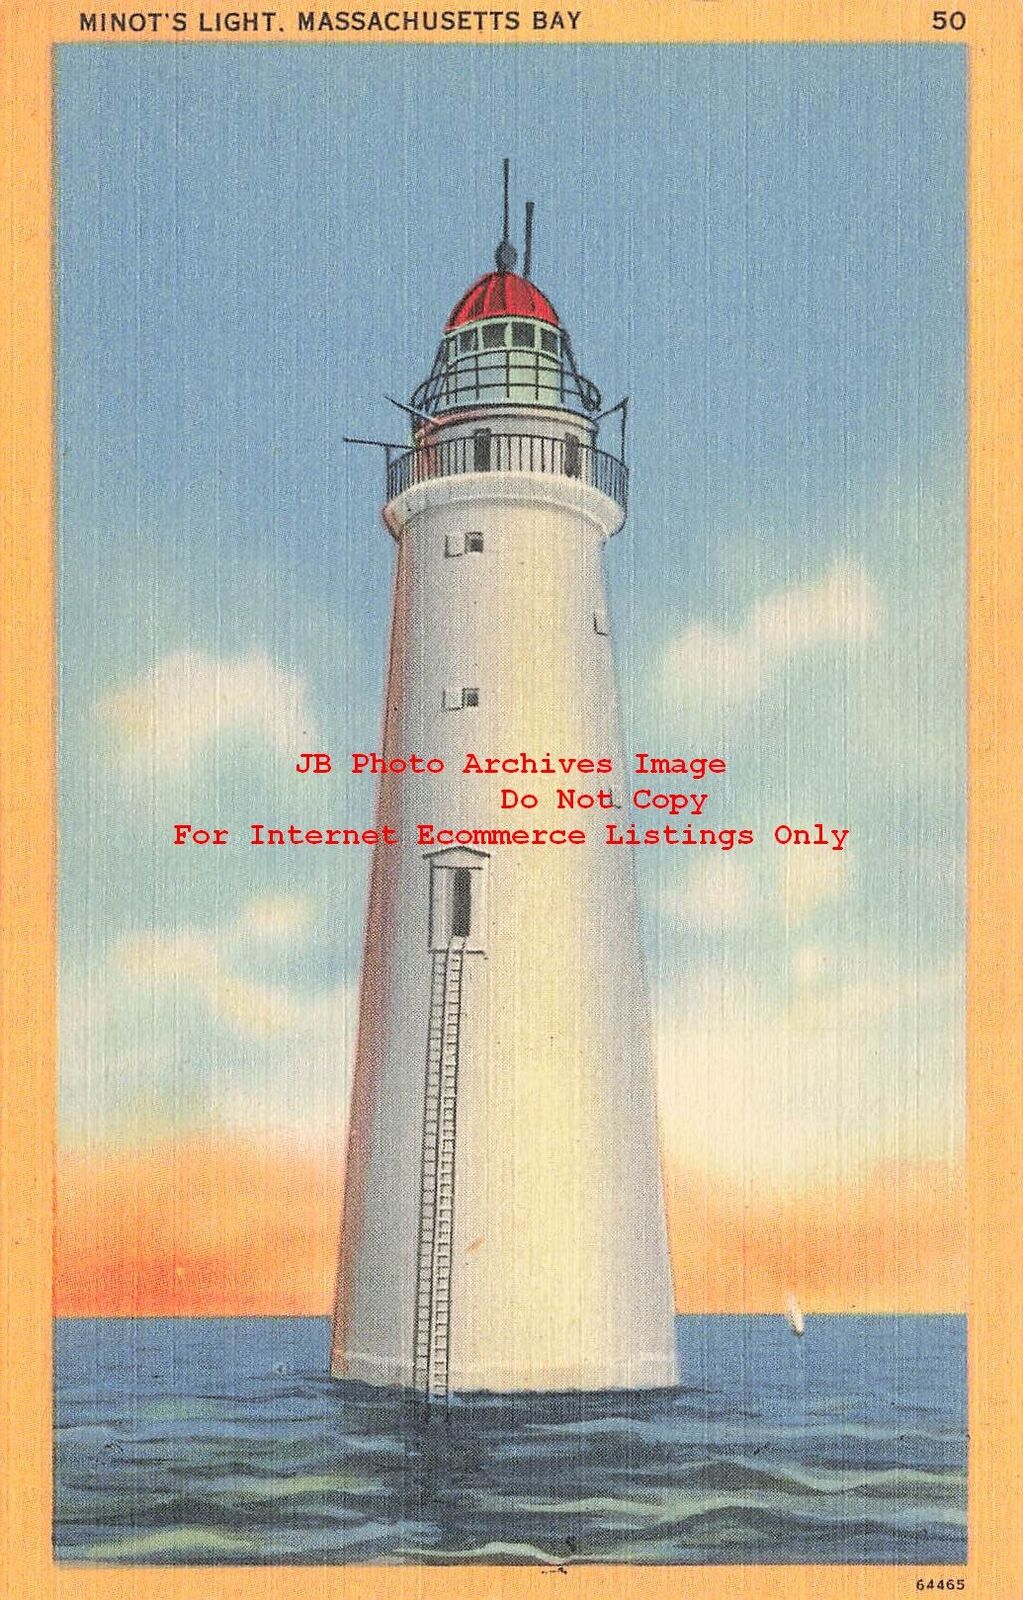 MA, Scituate, Massachusetts, Minot\'s Lighthouse, Tichnor No 64465